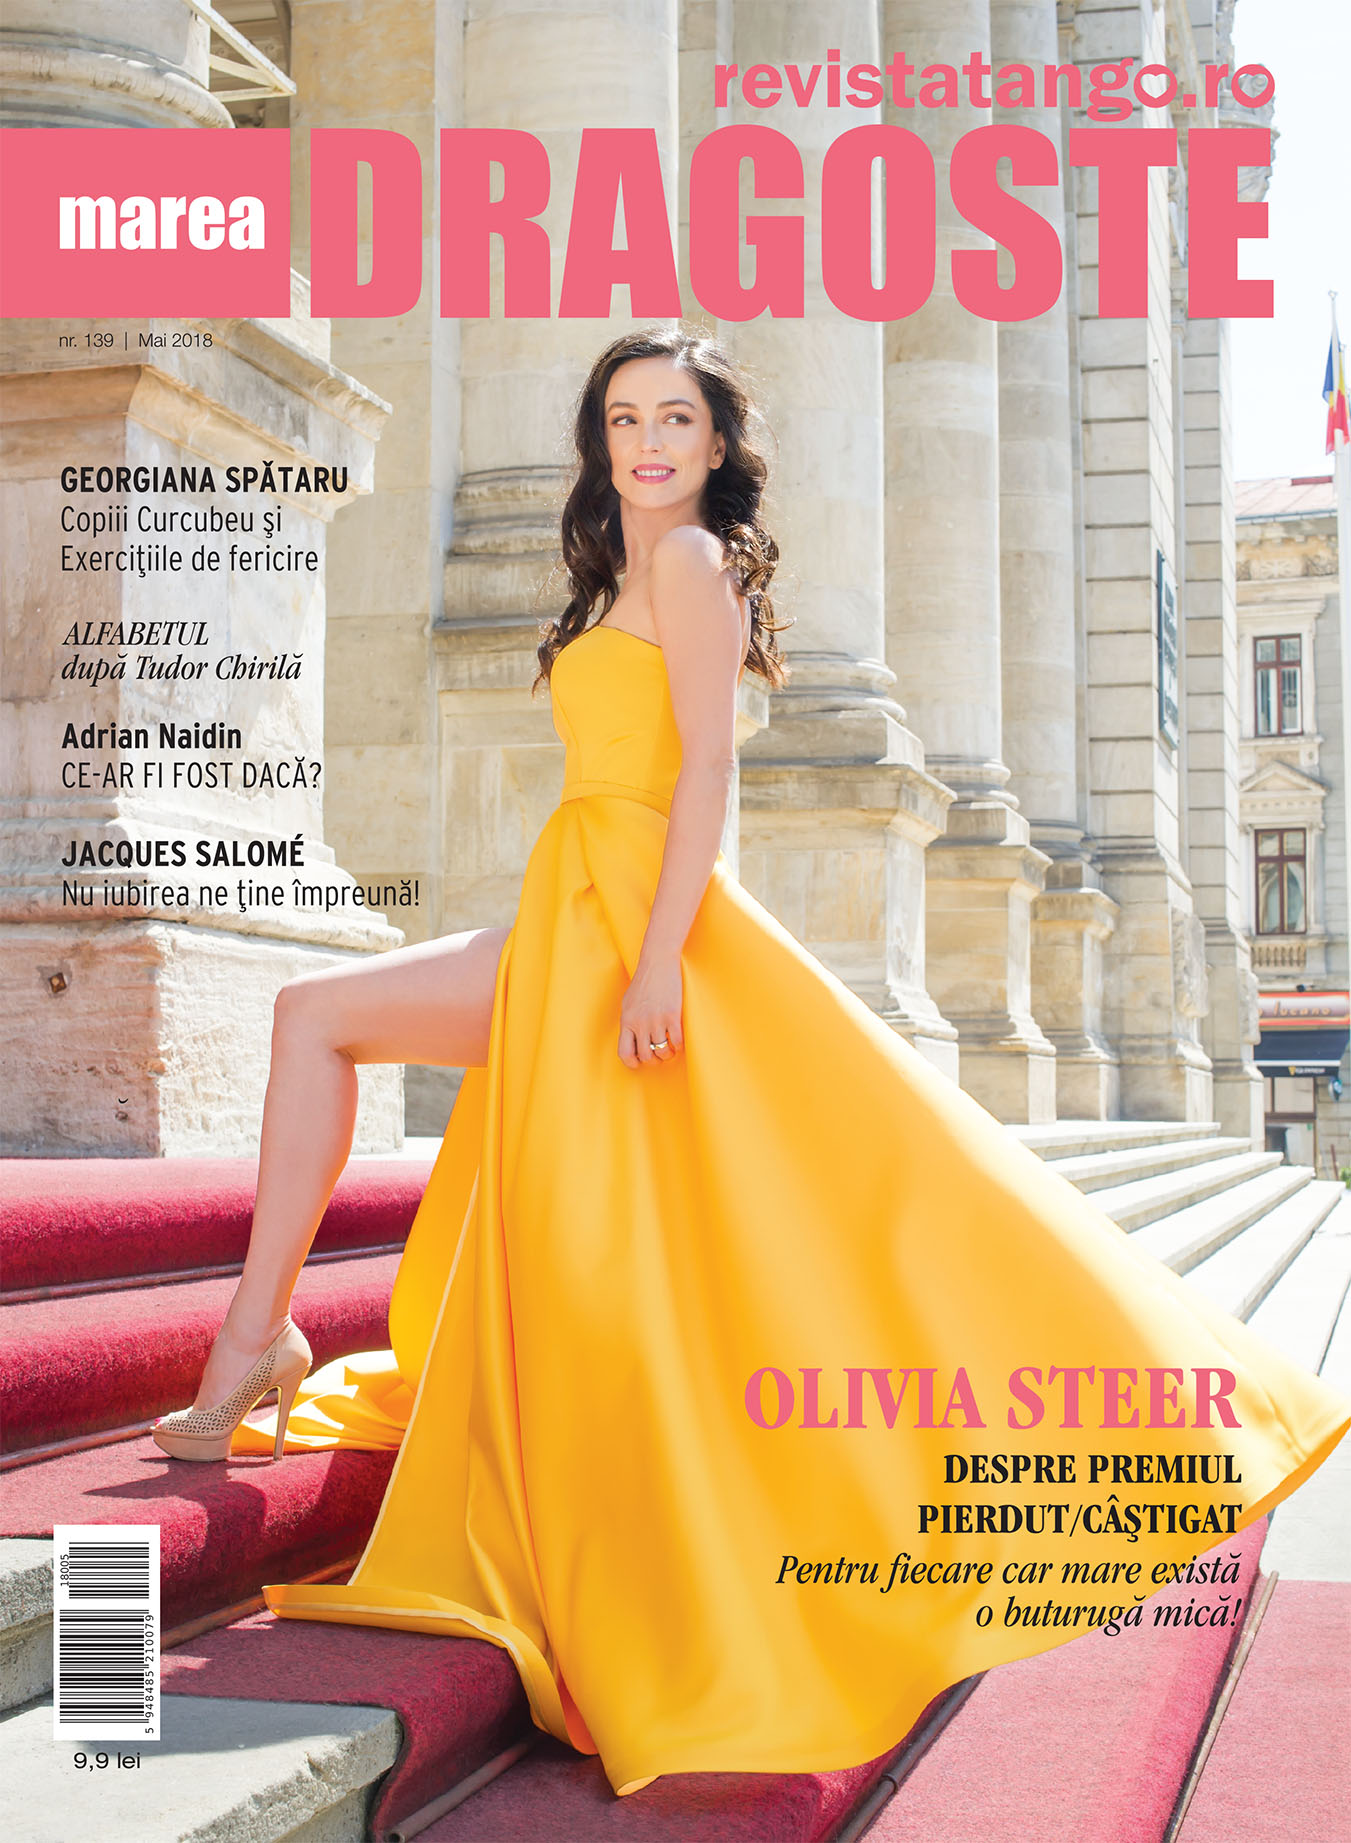 Olivia Steer pe coperta Marea Dragoste-revistatango.ro, nr. 139, mai 2018